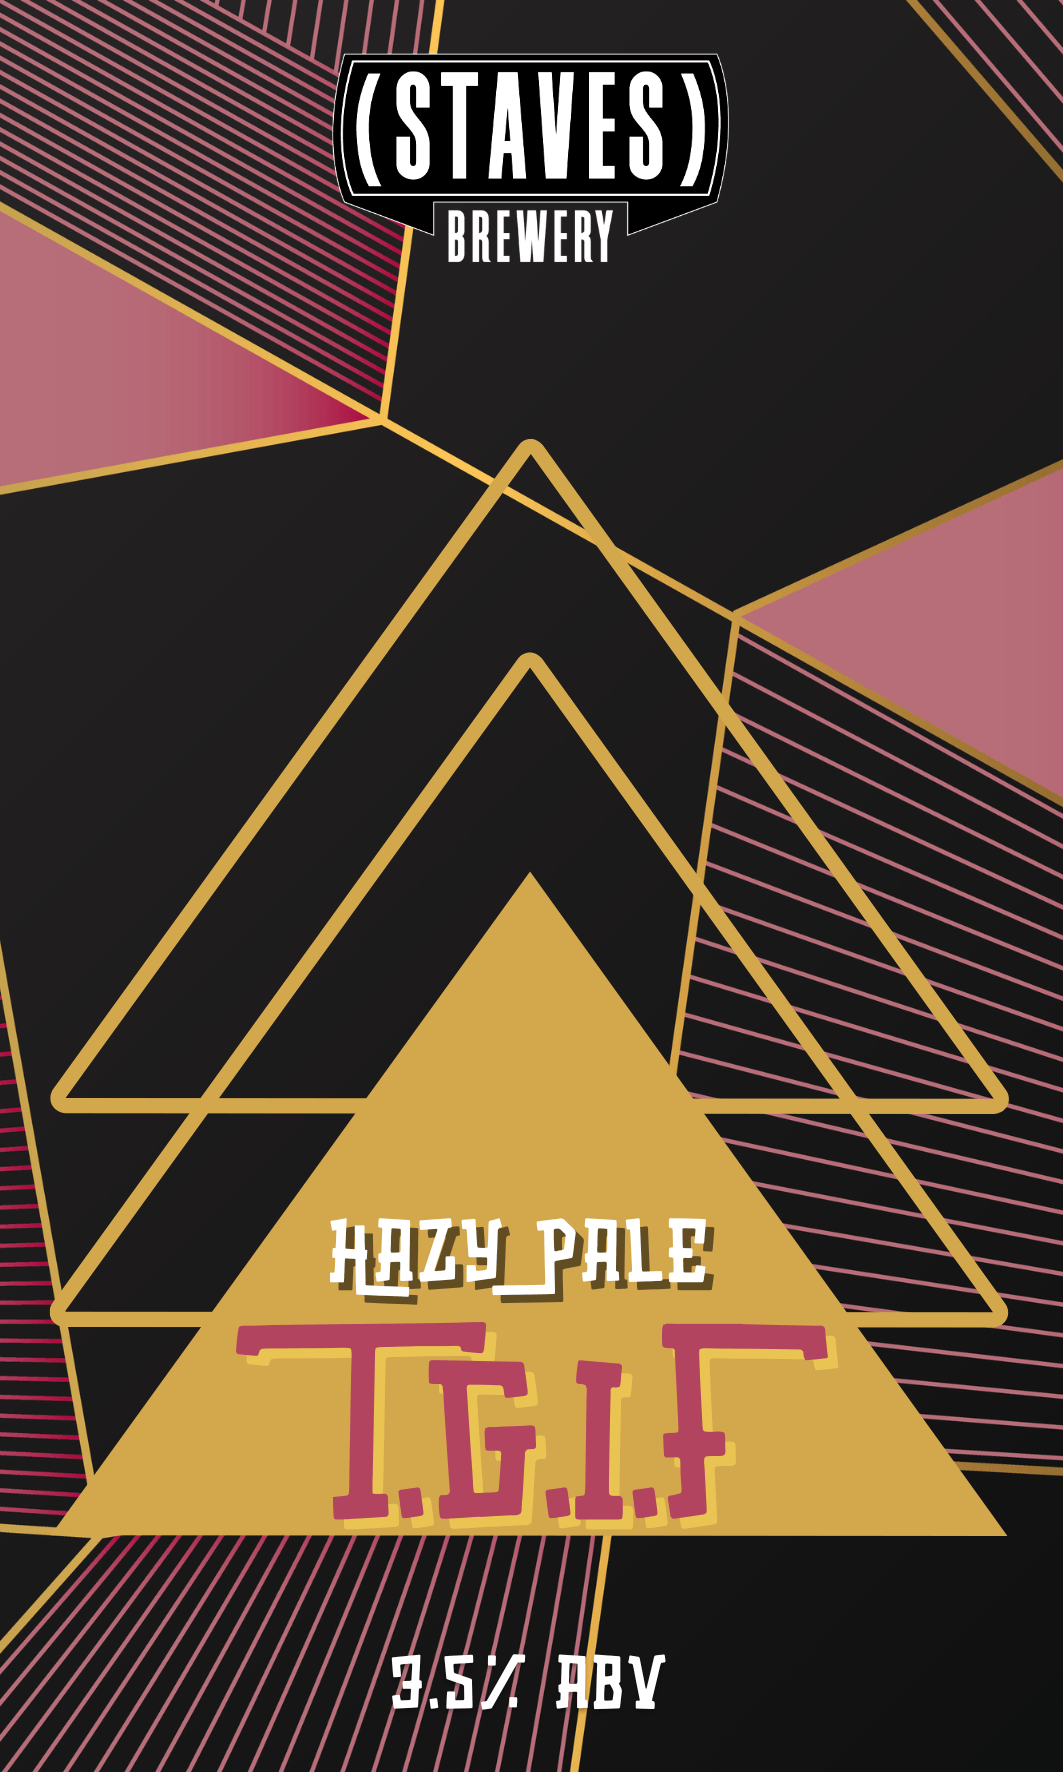 'TGIF' Mid Strength Hazy Pale Ale